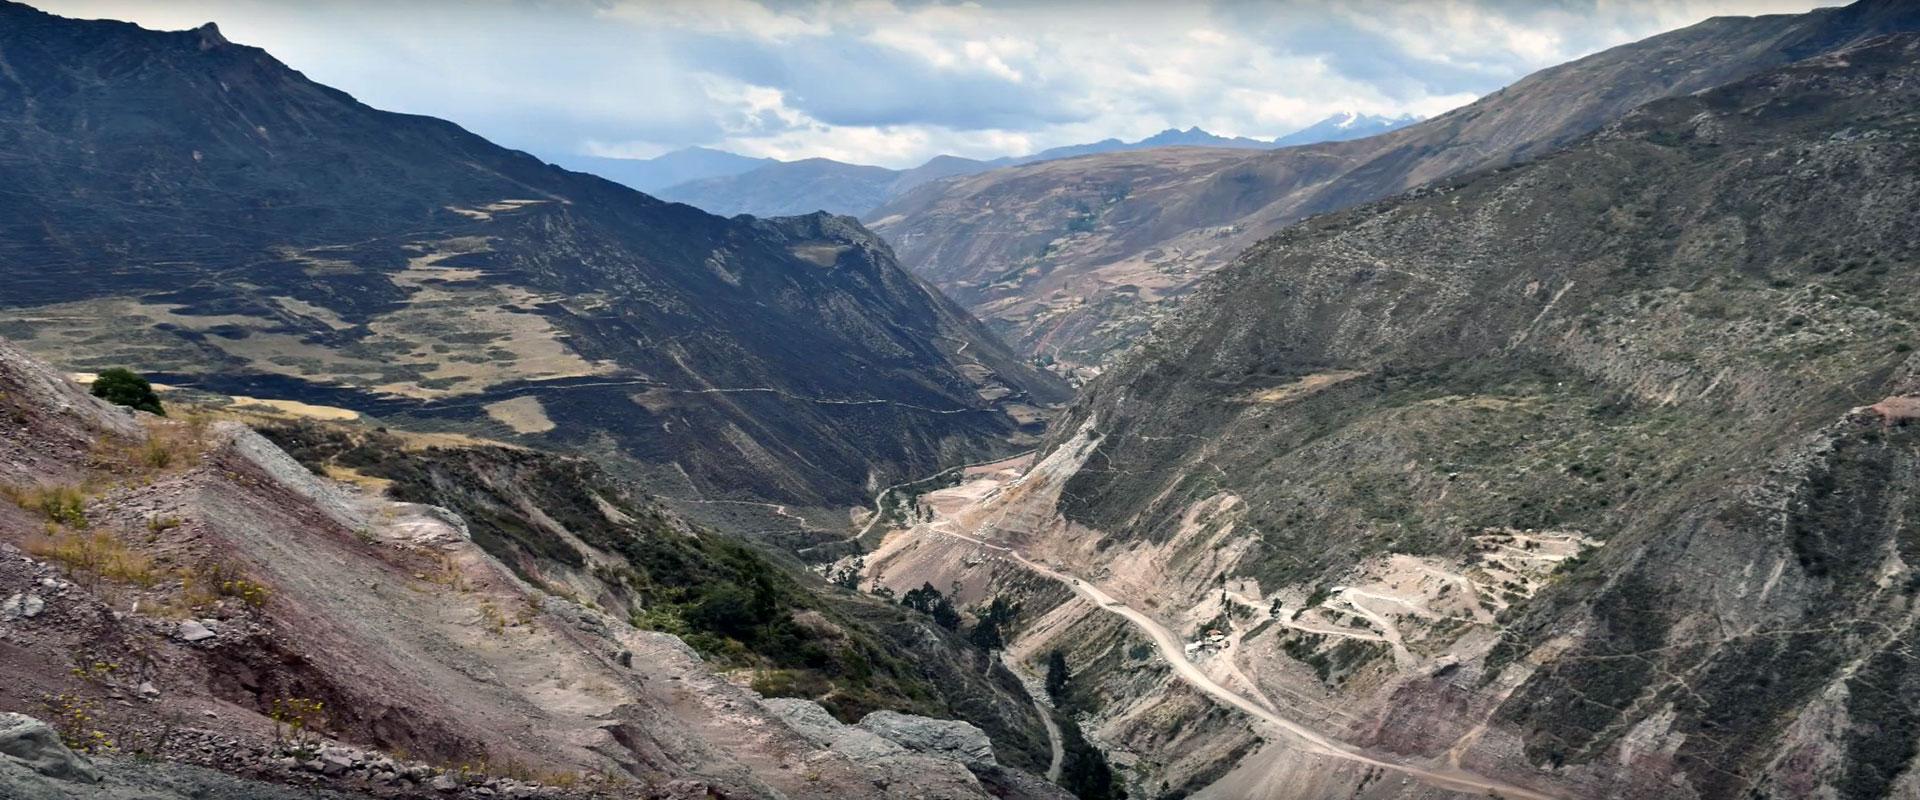 Goes through original rough seldom-visited Andean villages